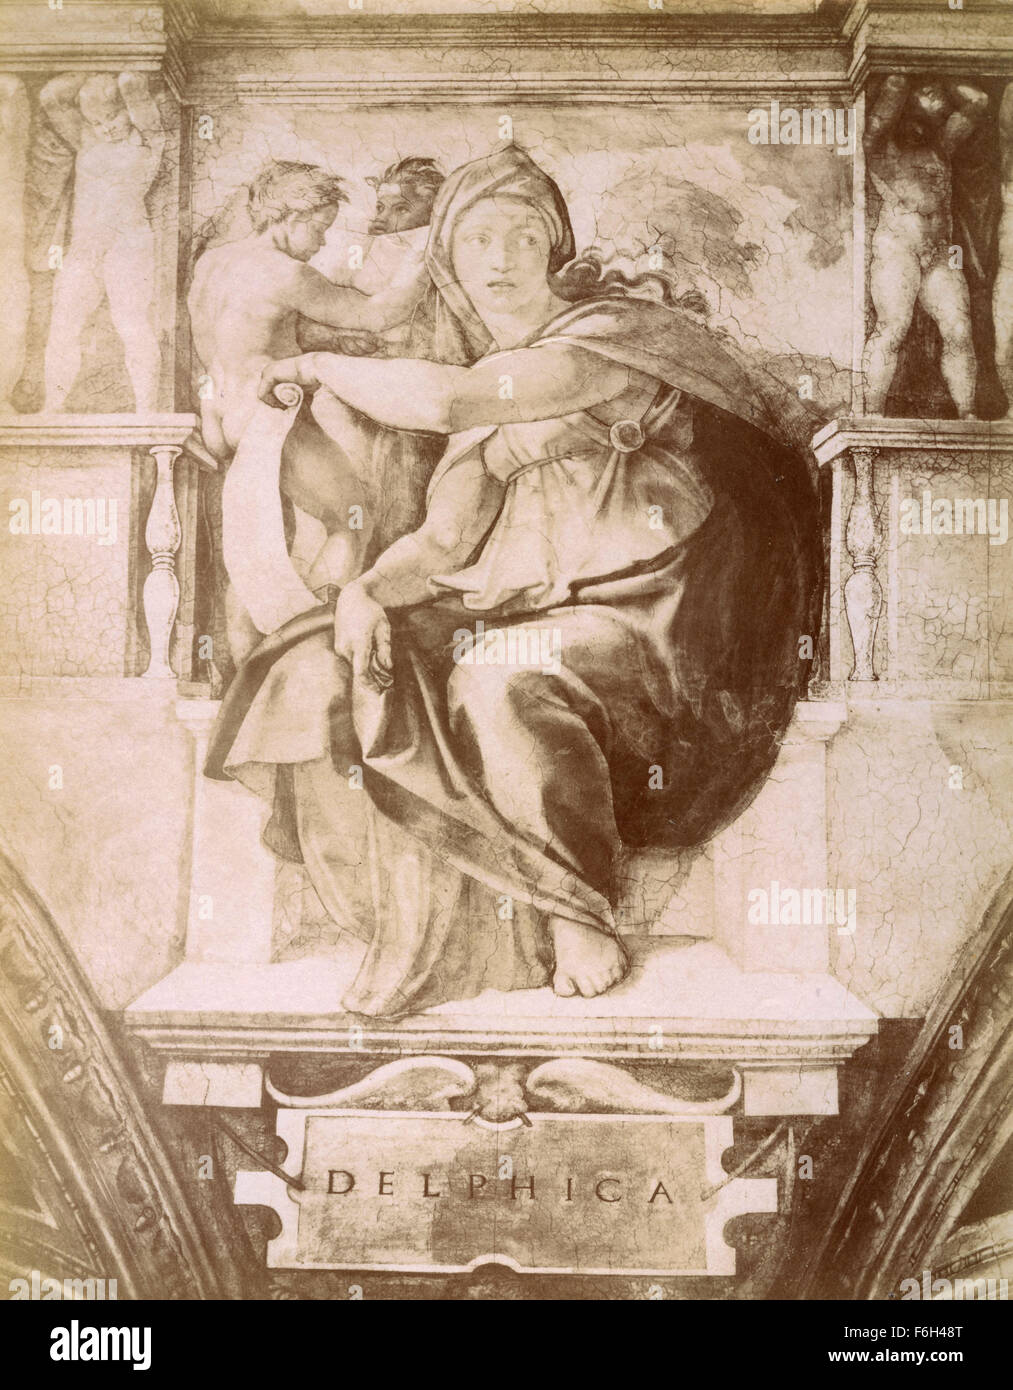 Delphic Sibyl, Michelangelo drawing Stock Photo